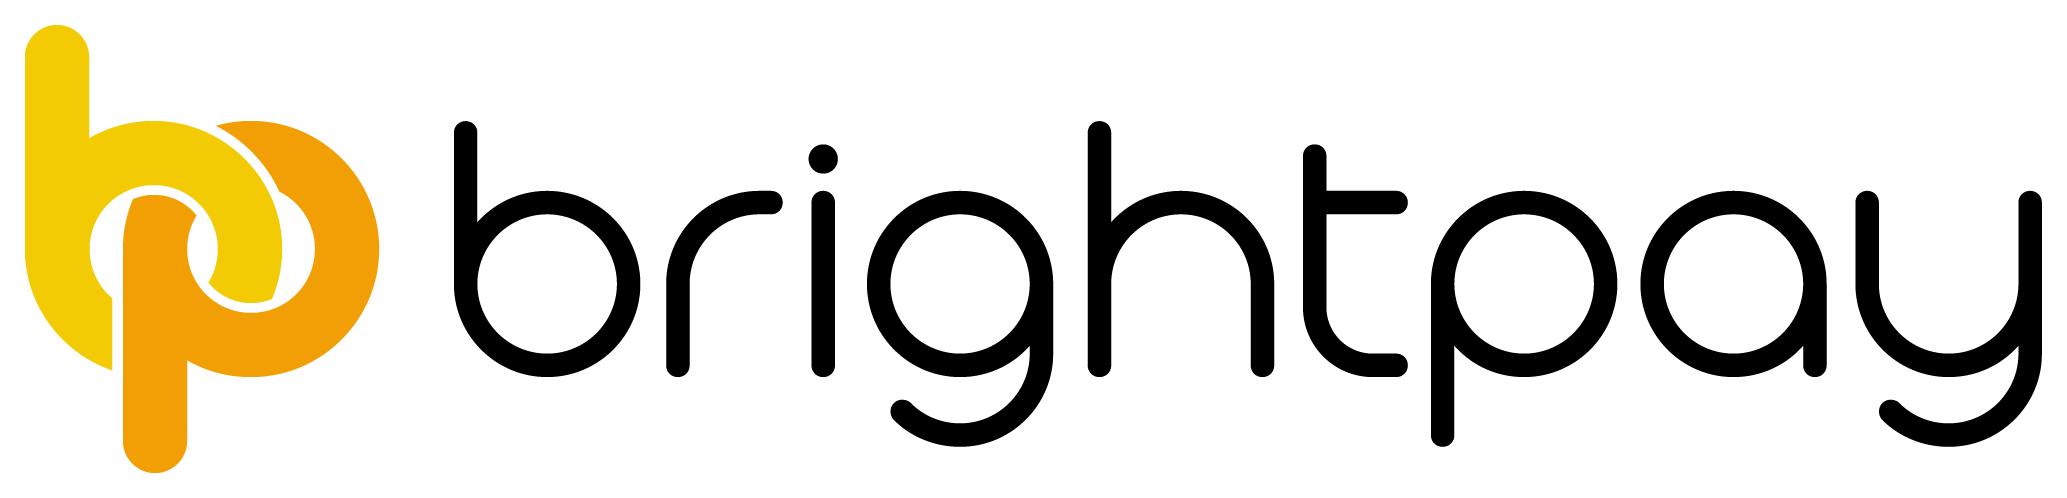 brightpay logo